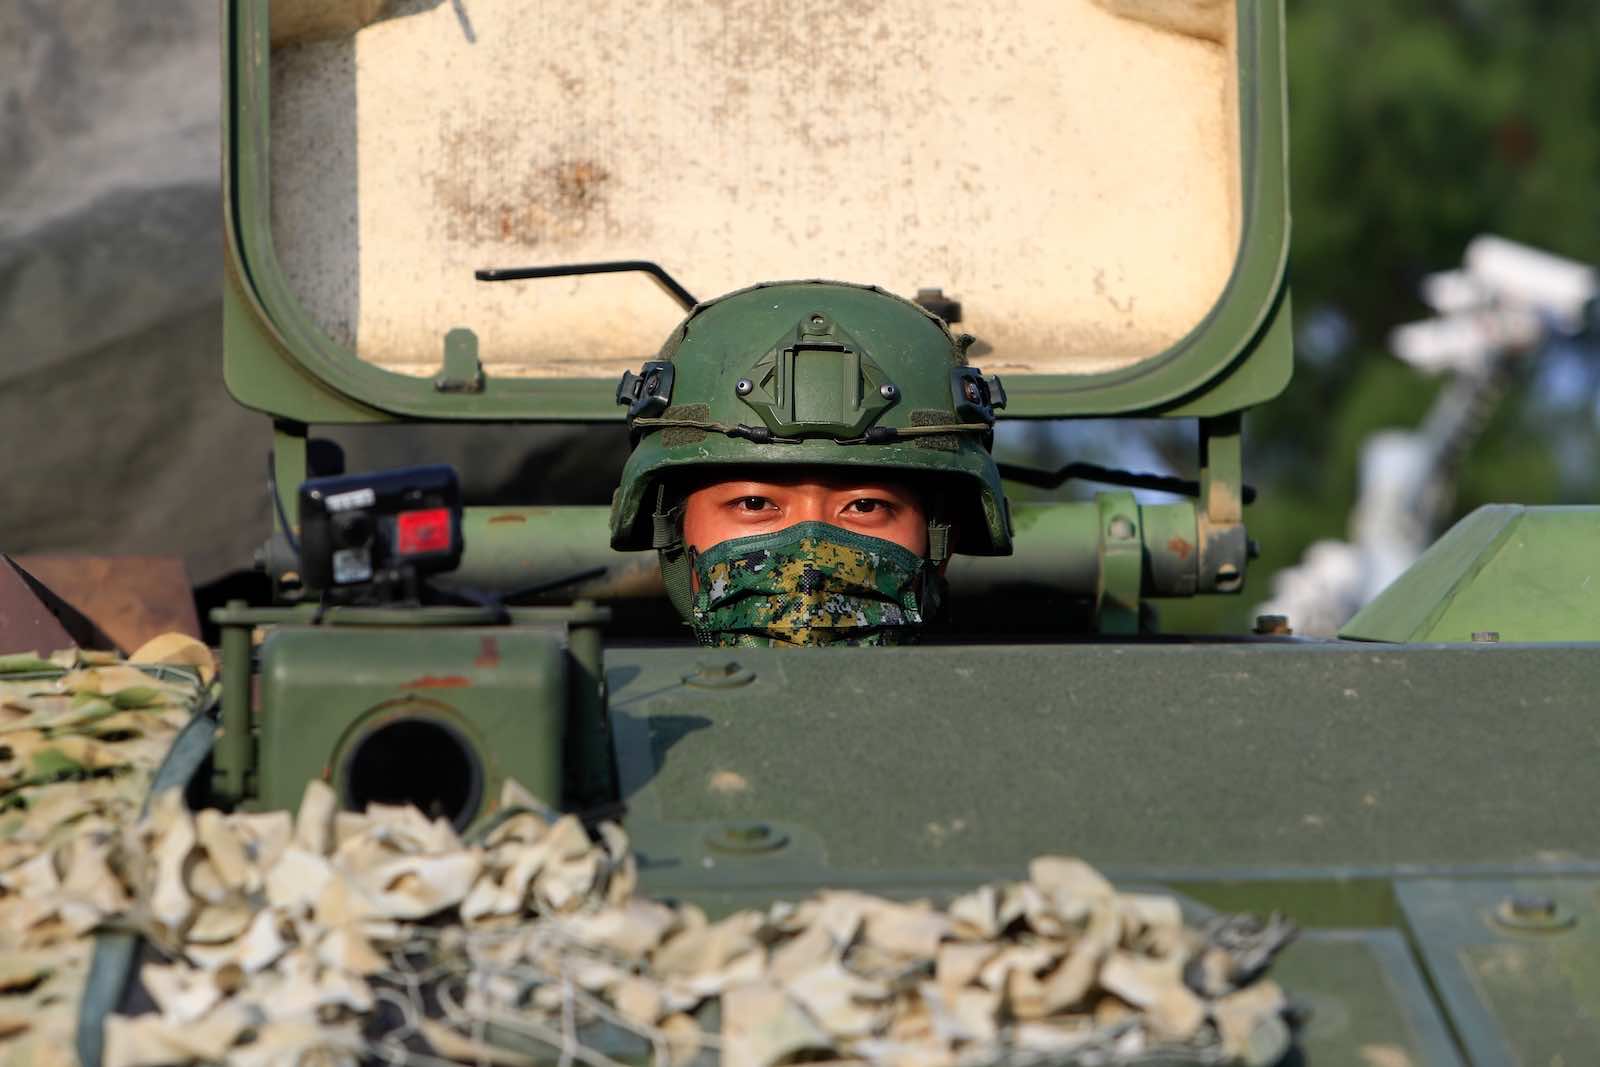 Military drills in Tainan, Taiwan, in September (Ceng Shou Yi/NurPhoto via Getty Images)